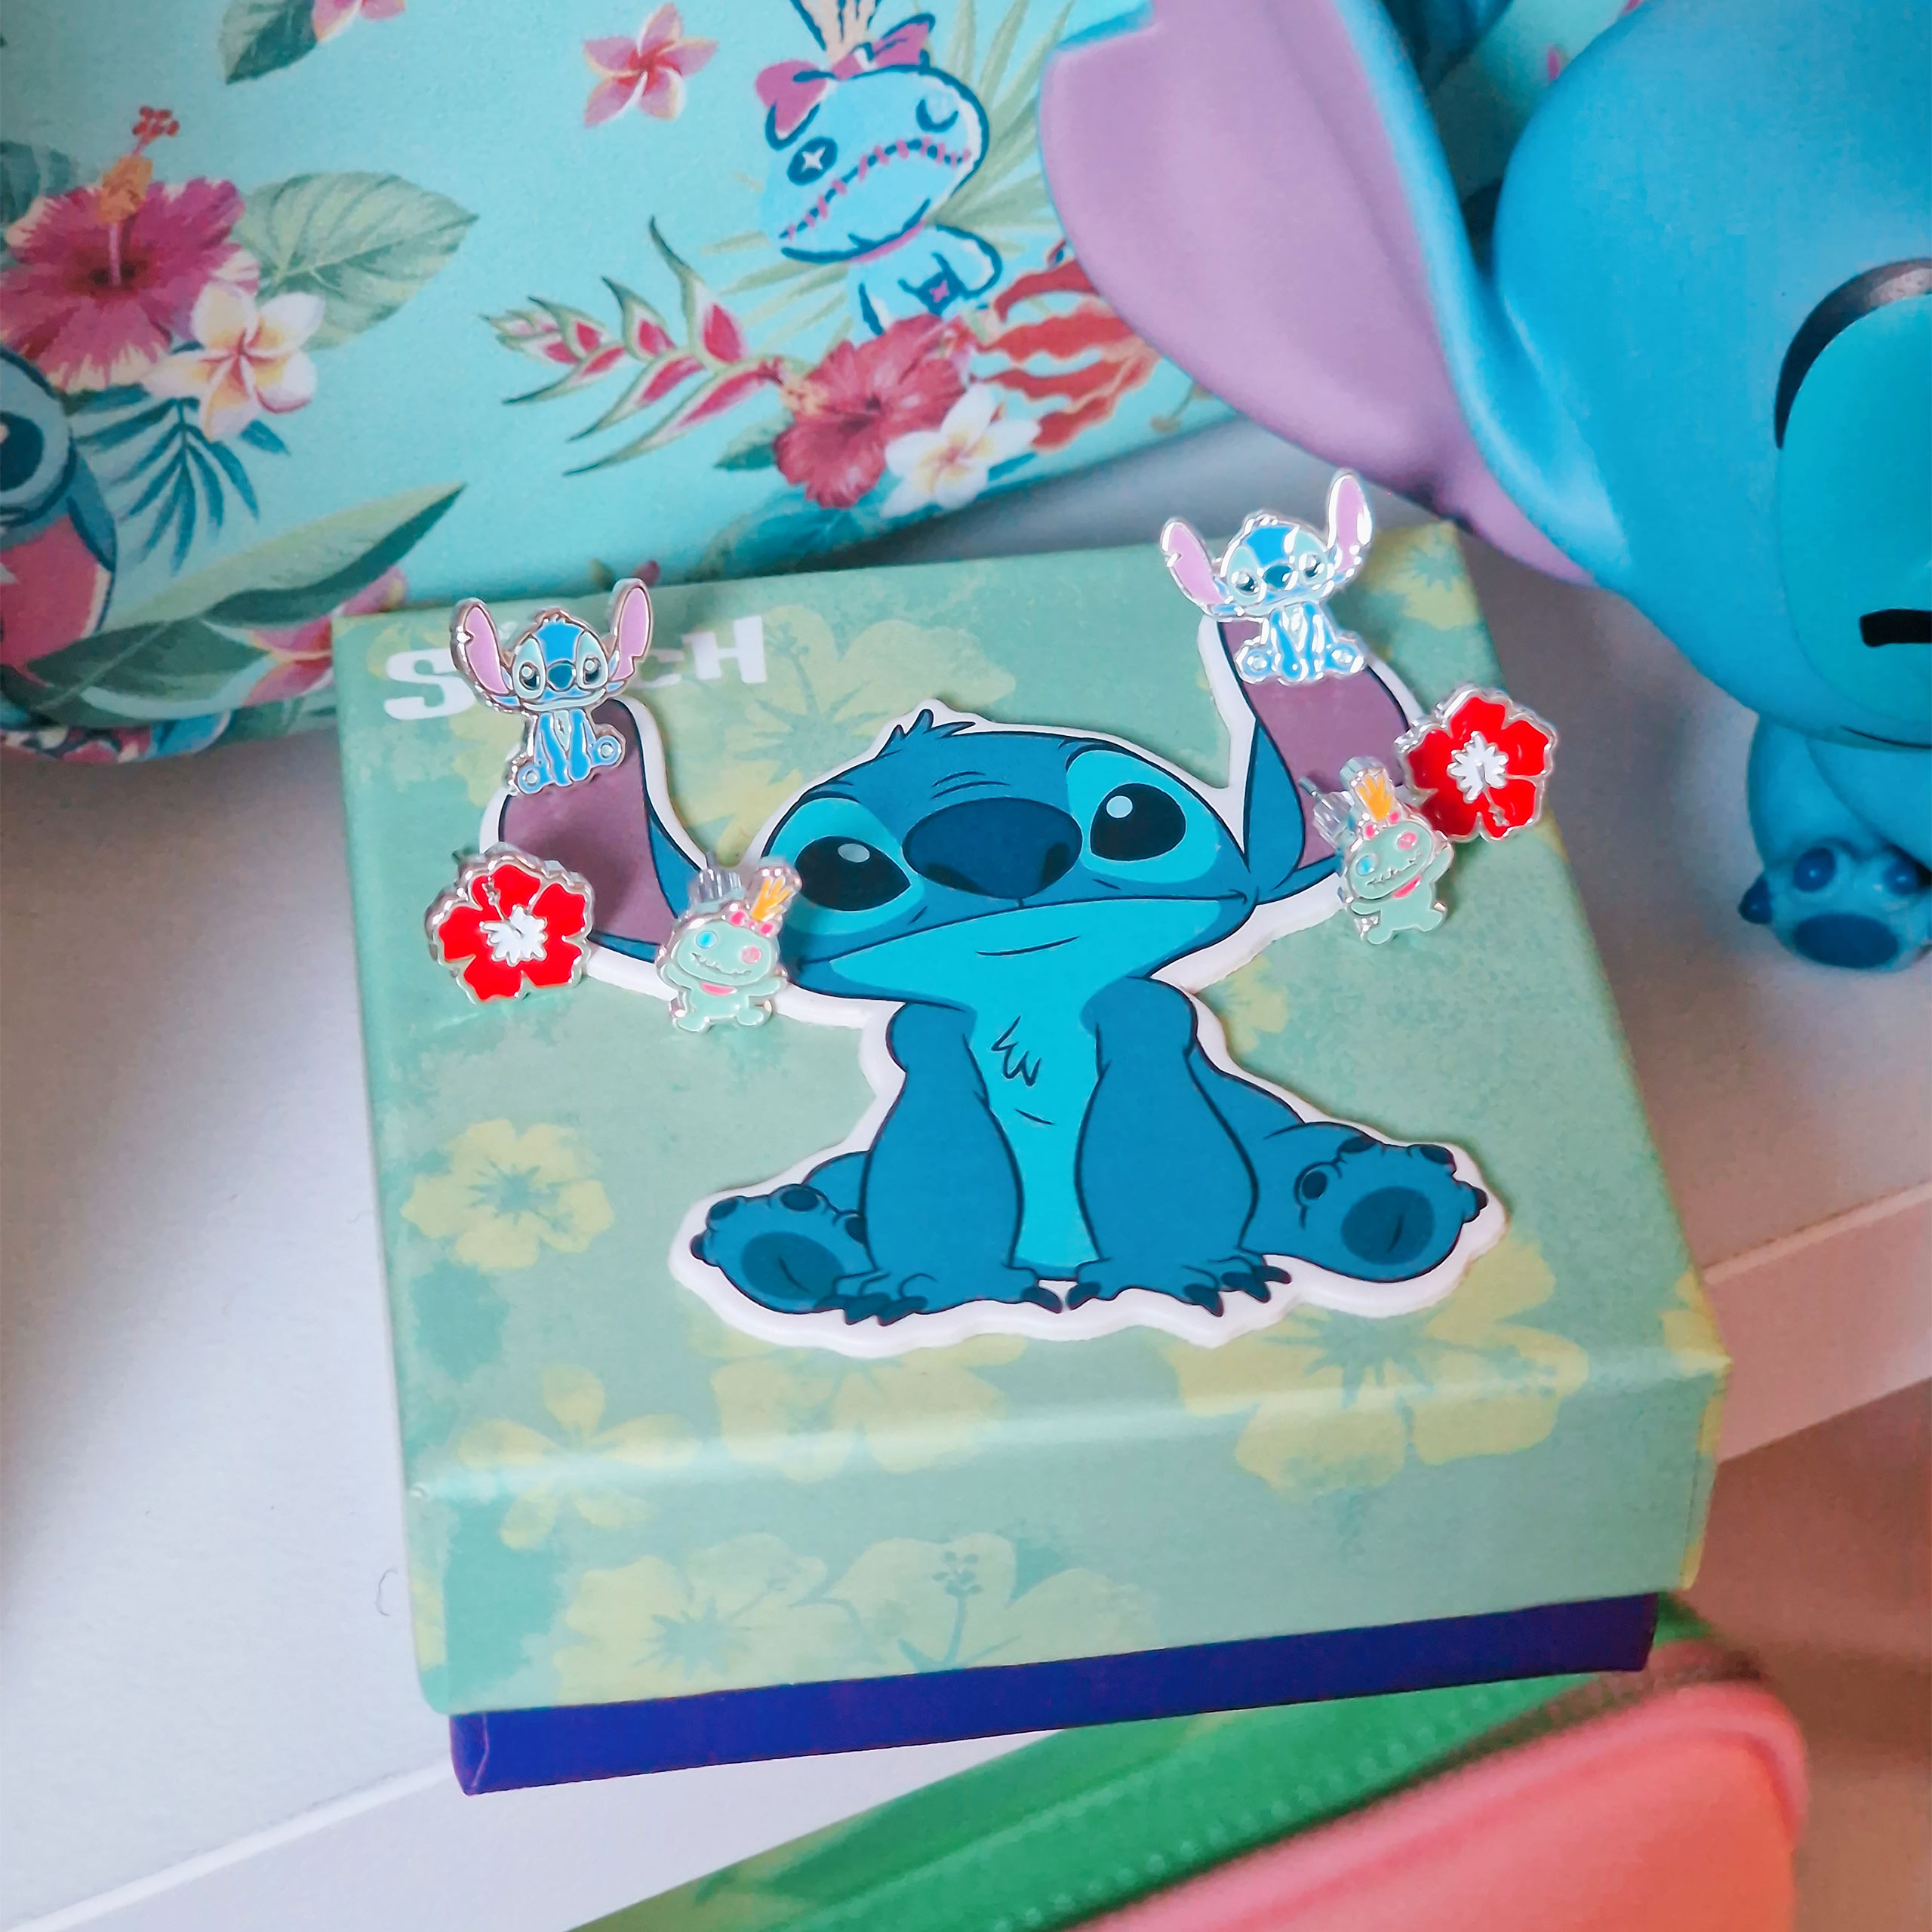 Lilo & Stitch - Earrings 3-piece set in gift box